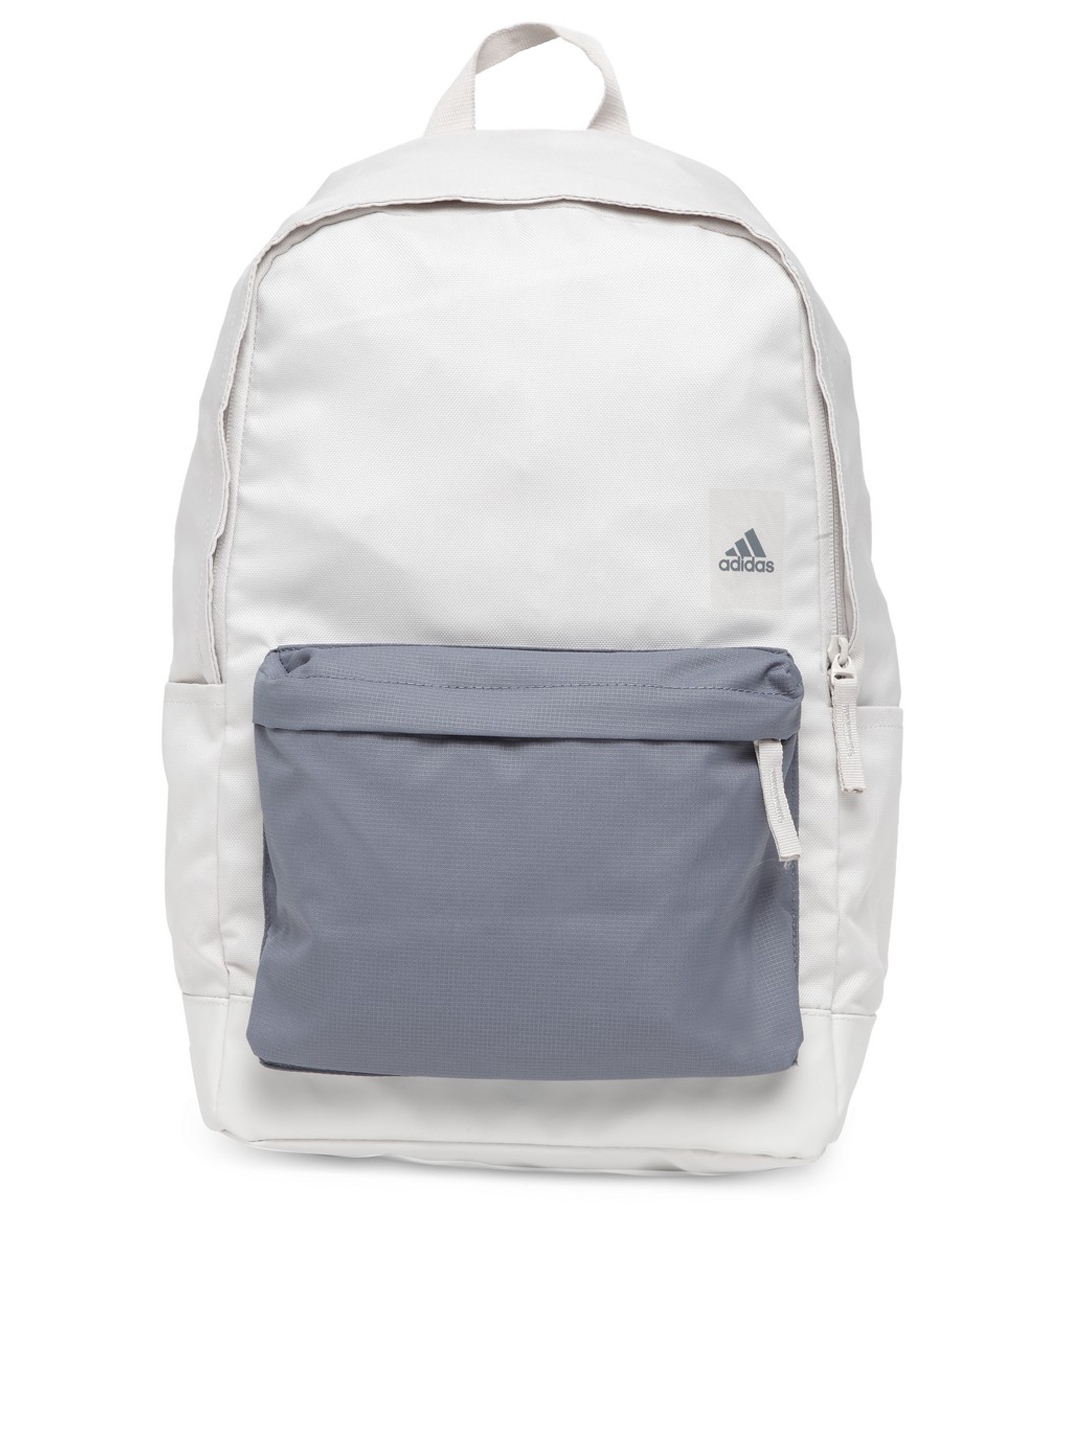 Buy ADIDAS Unisex Off White Grey Classic Laptop Backpack - for Unisex 2496208 | Myntra